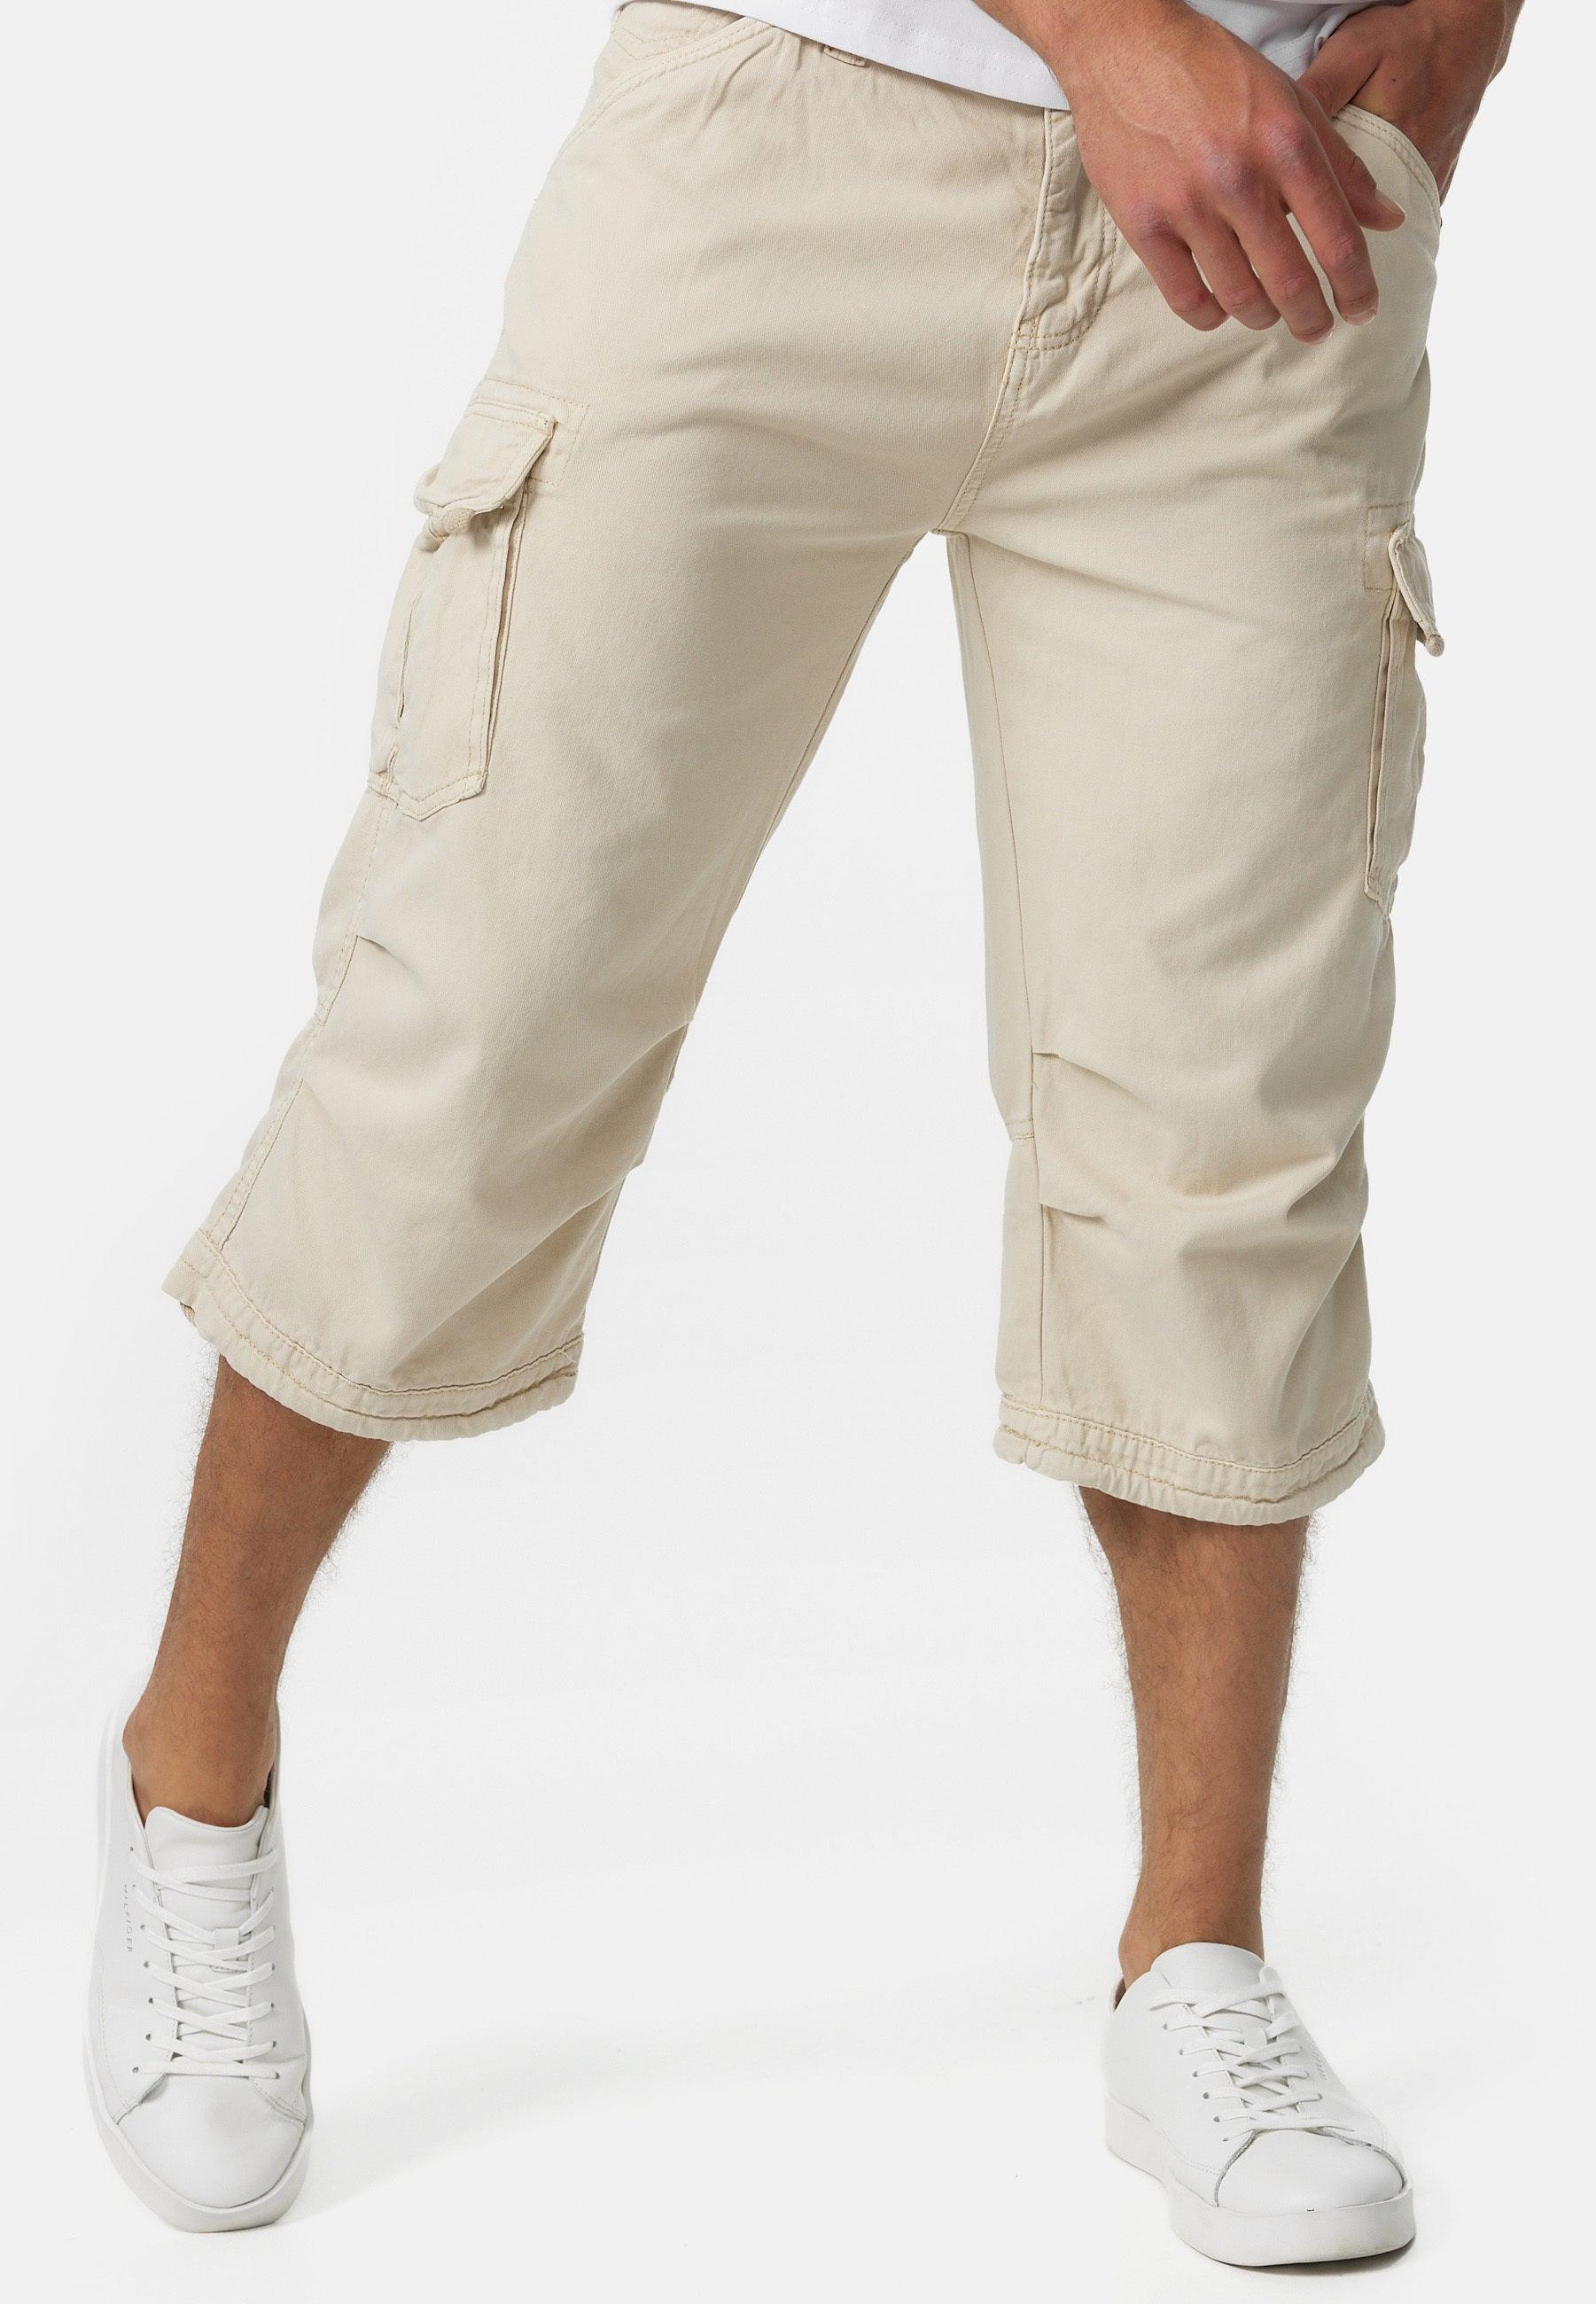 Buy Magic Mens Cargo Shorts 34 Relaxed Fit Cotton Capri Cargo Pants  Beige30 at Amazonin